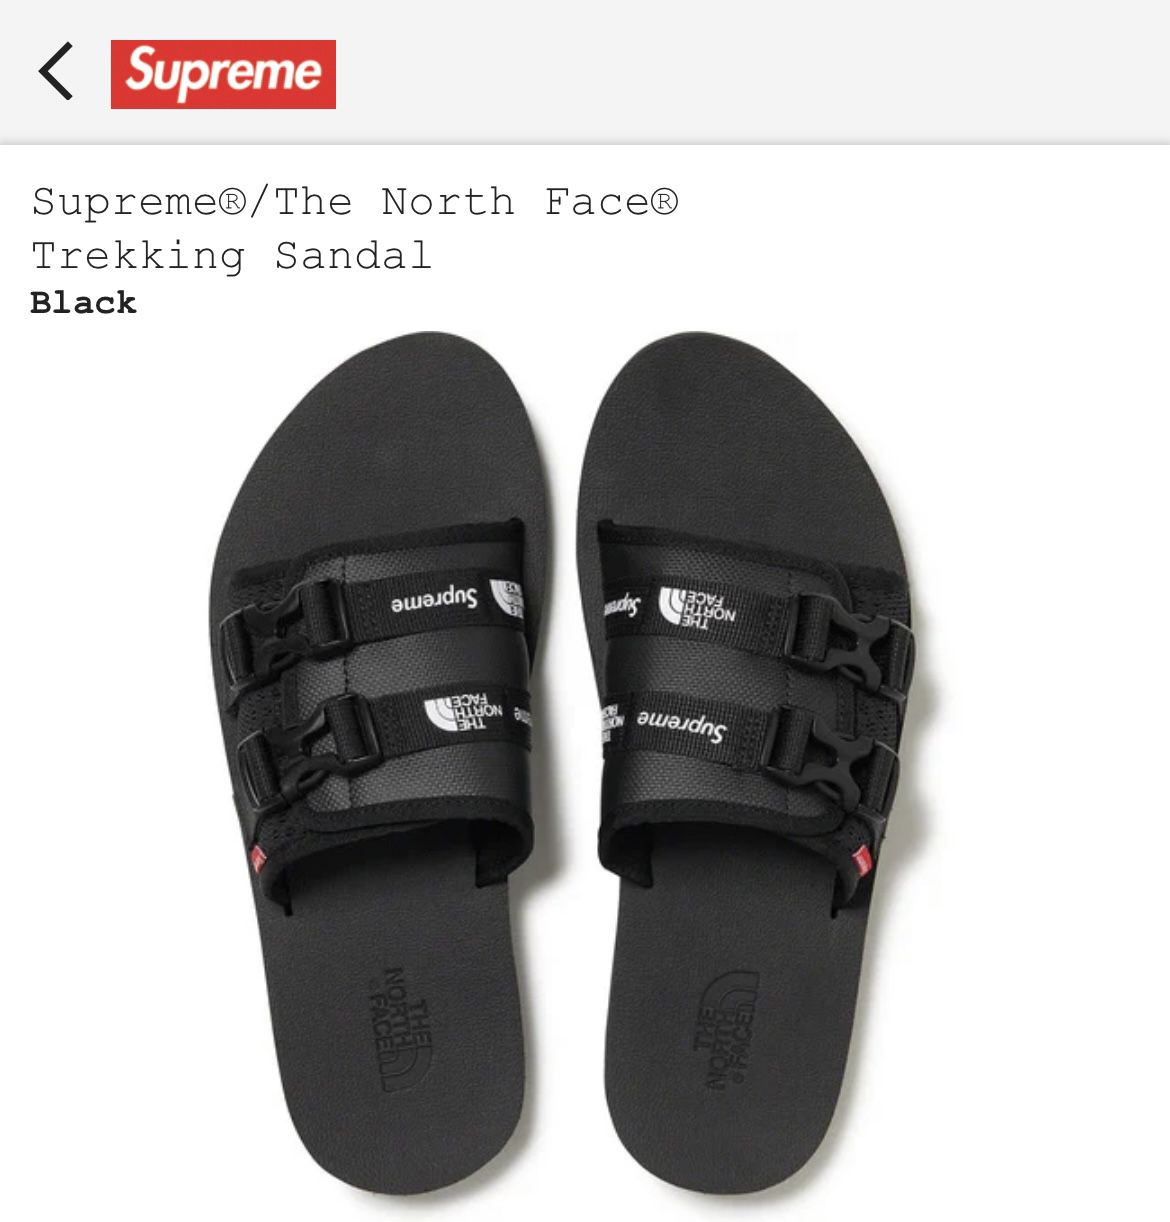 Supreme Sandals For Men Size 10 North Face